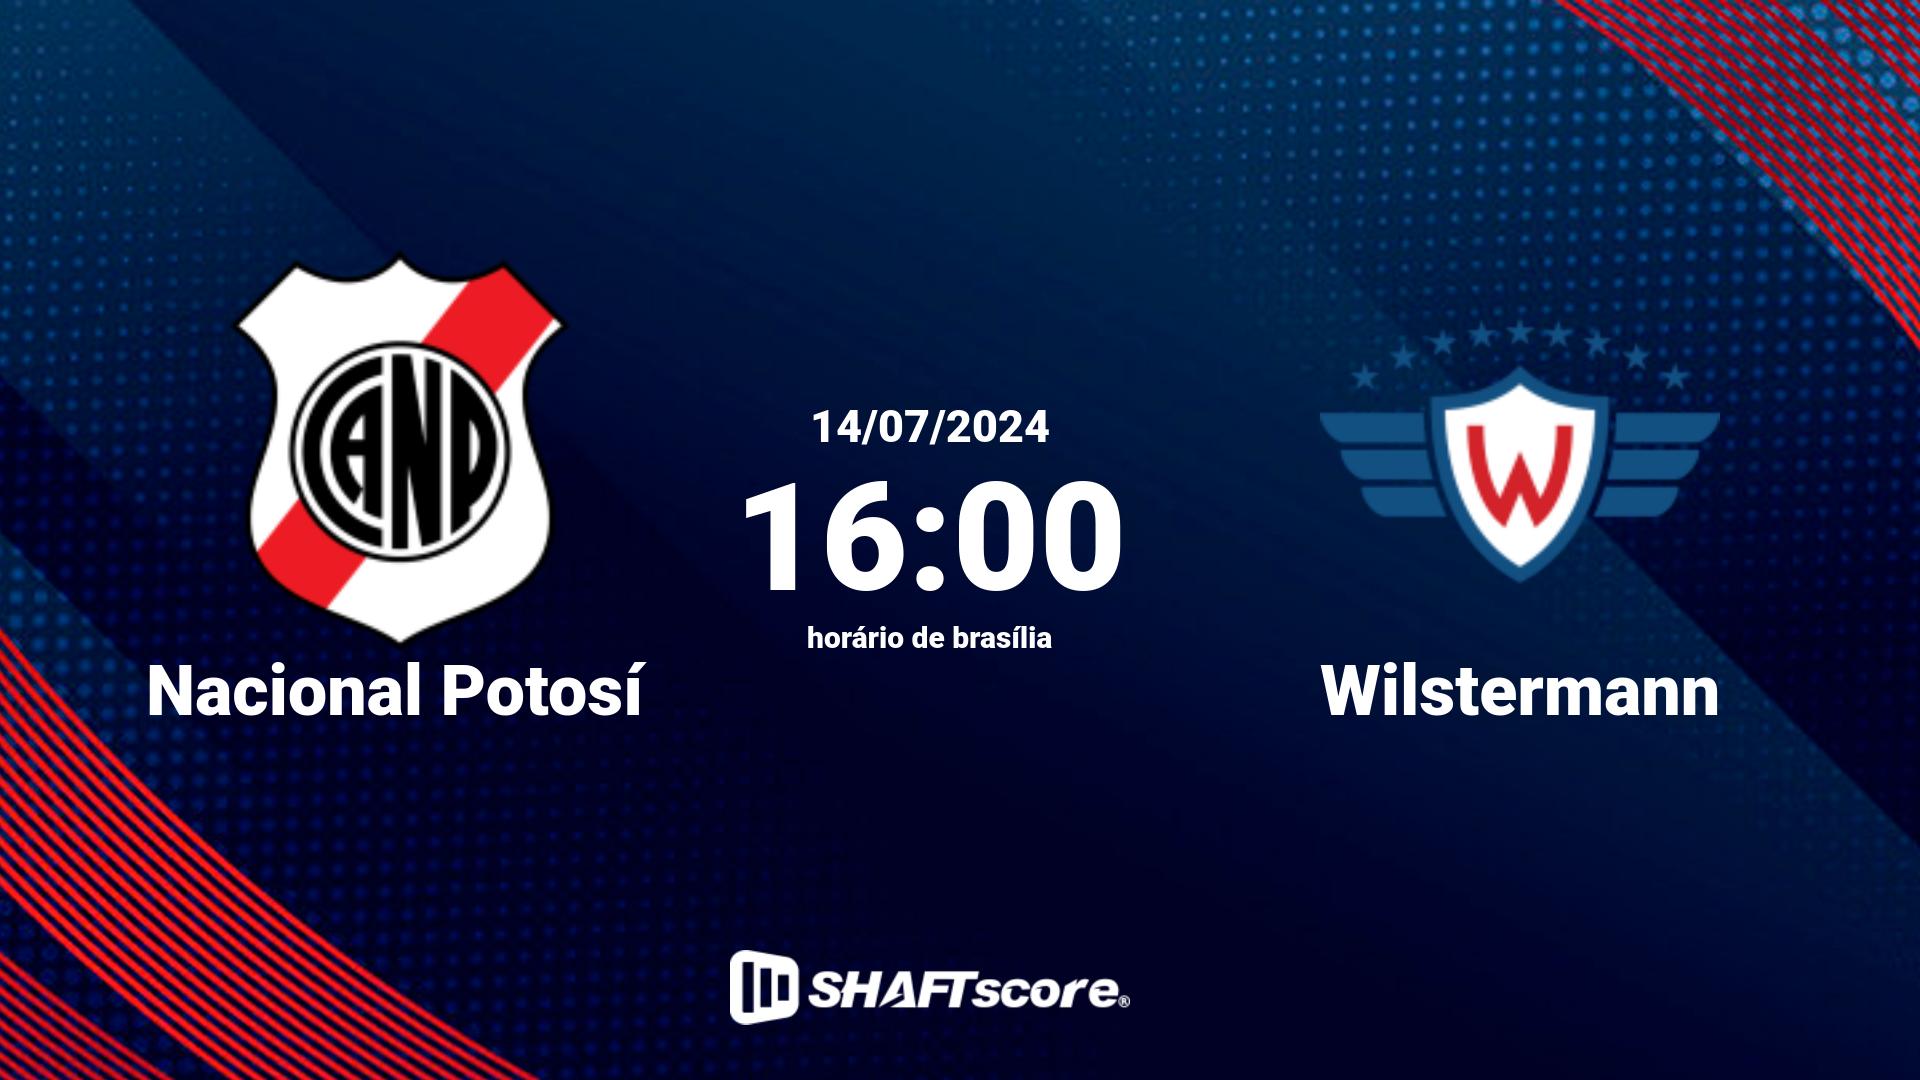 Estatísticas do jogo Nacional Potosí vs Wilstermann 14.07 16:00